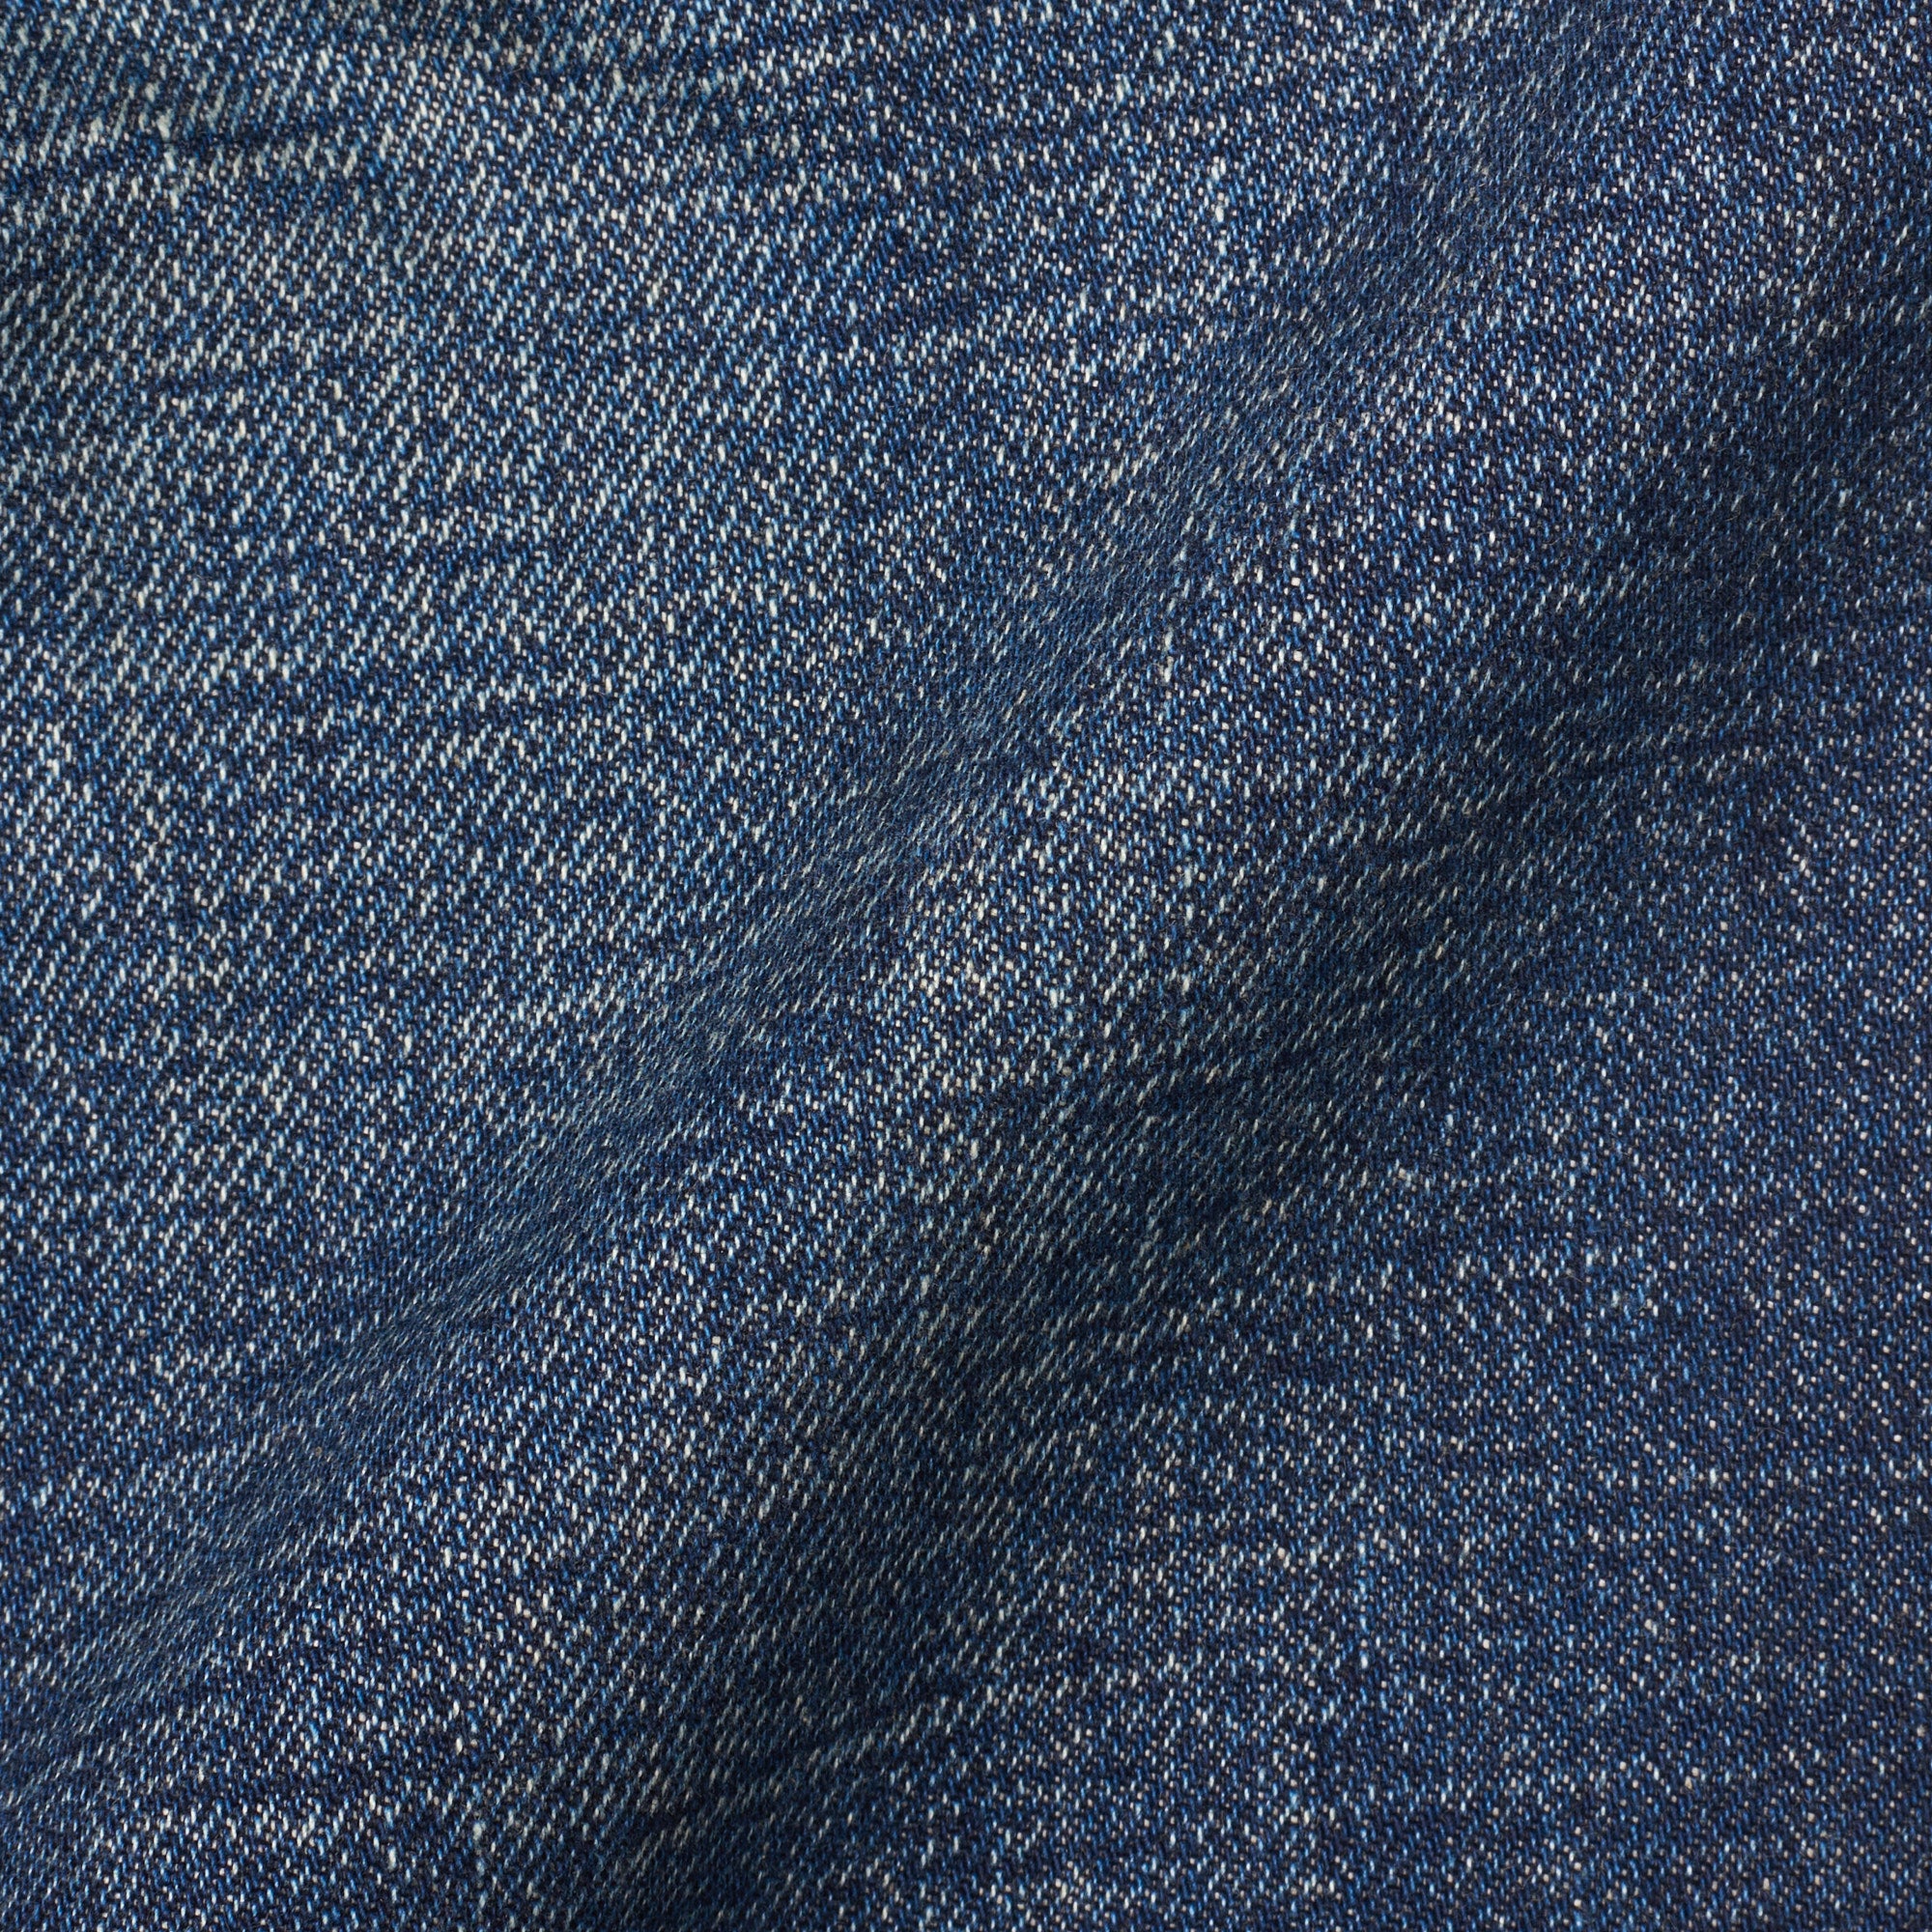 DIOR Made in Japan Blue Denim Jeans Pants US 32 Slim Fit